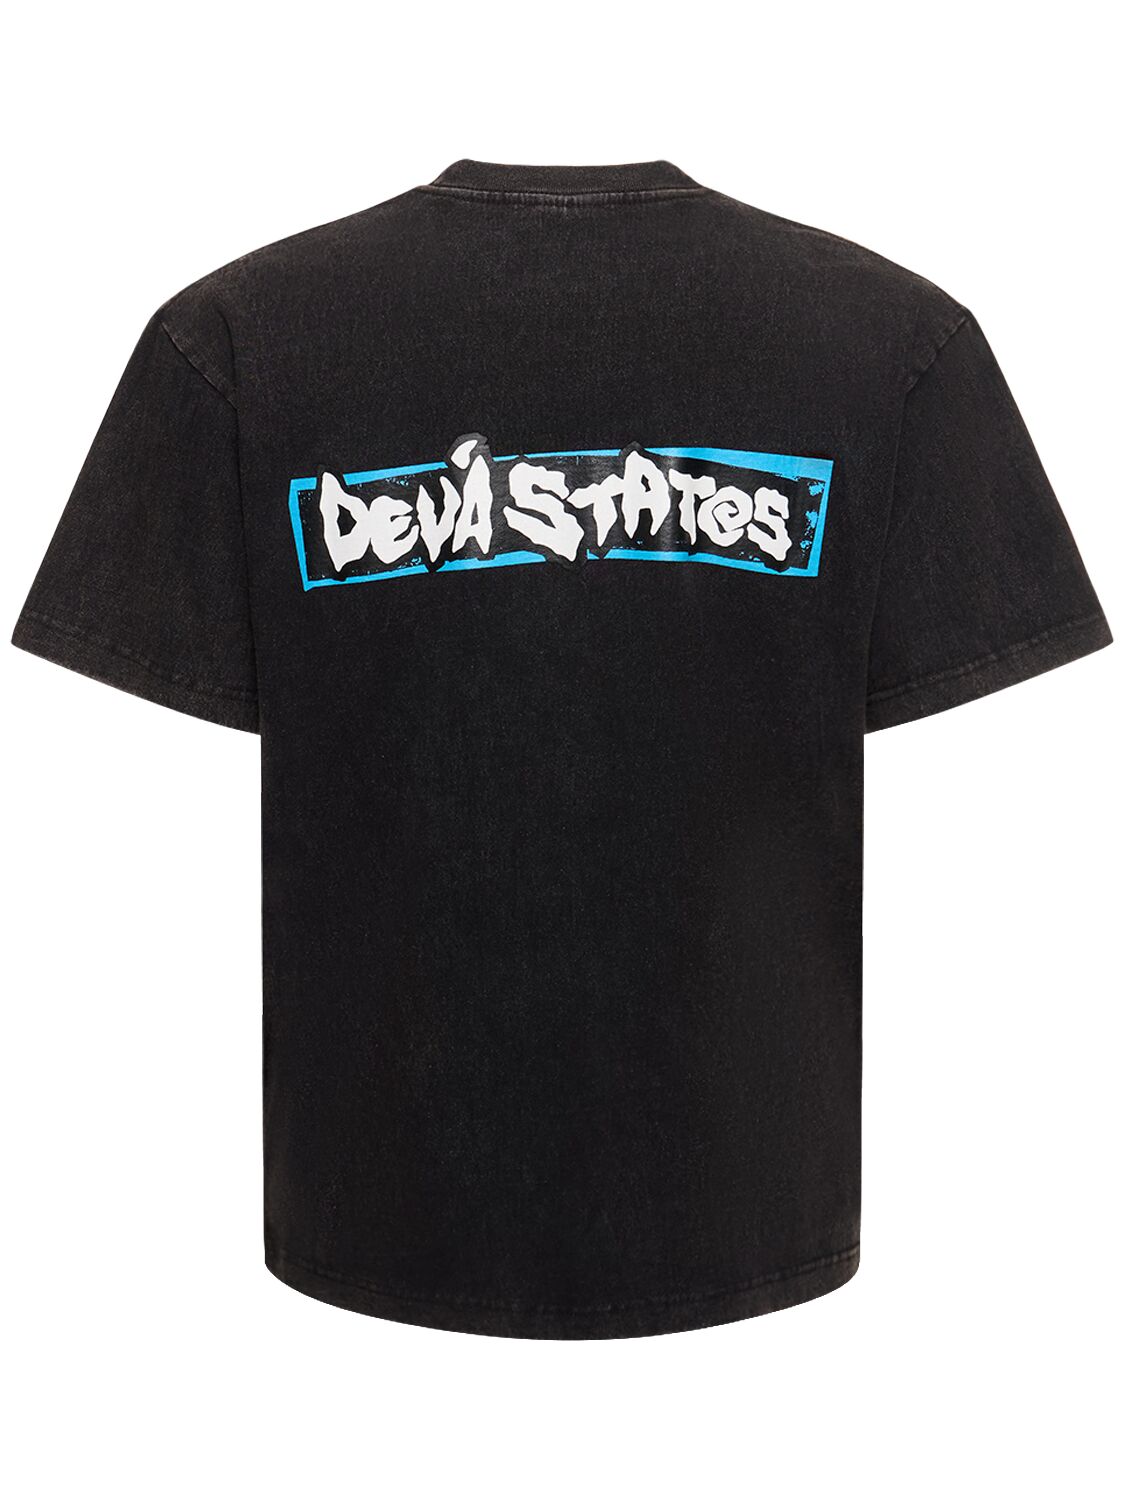 Shop Deva States Astronauts Black T-shirt